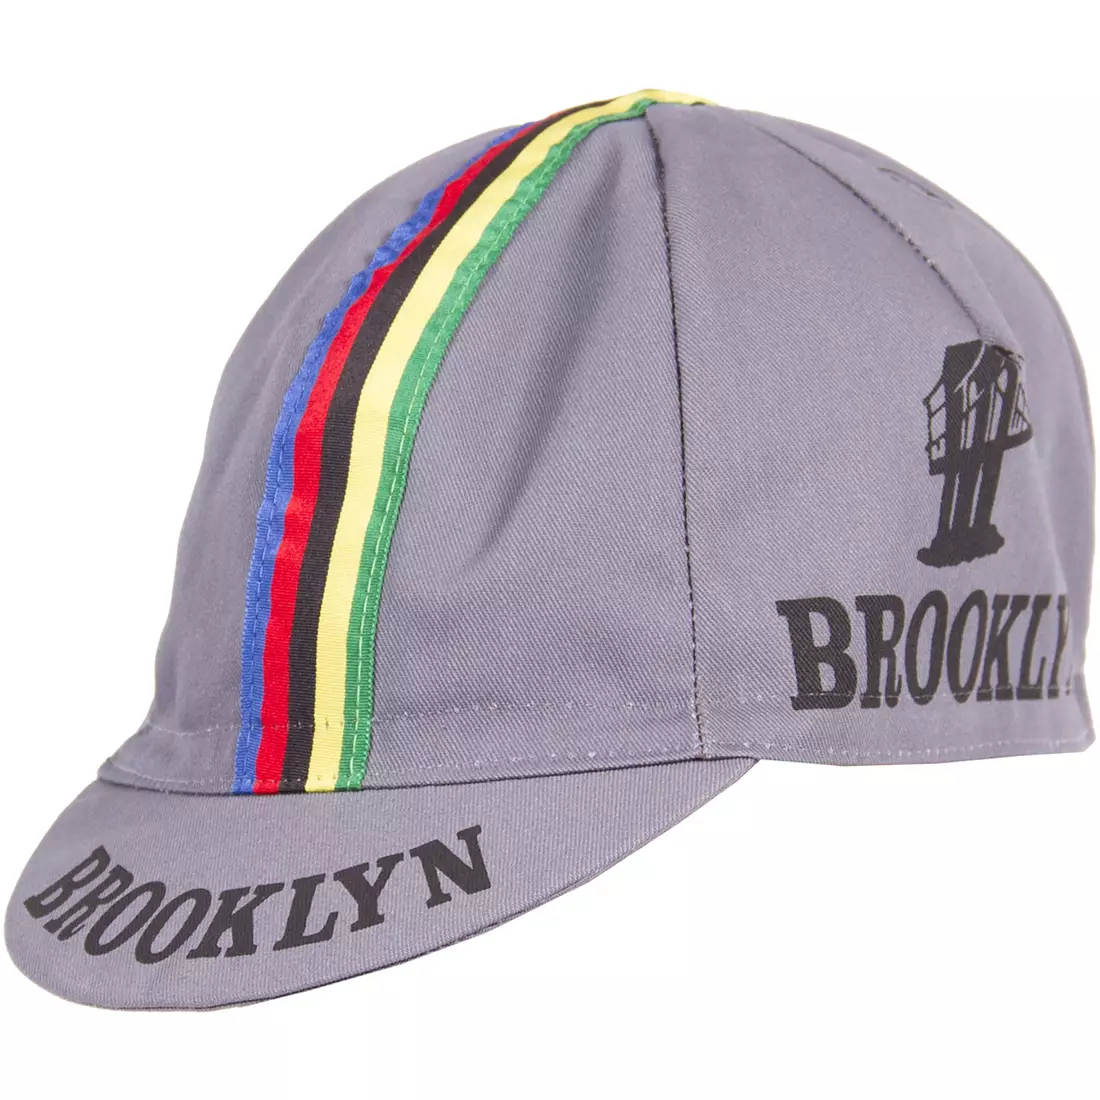 GIORDANA SS18 Radmütze – Brooklyn – Grau mit Streifenband GI-S6-COCA-BROK-GRAY Einheitsgröße